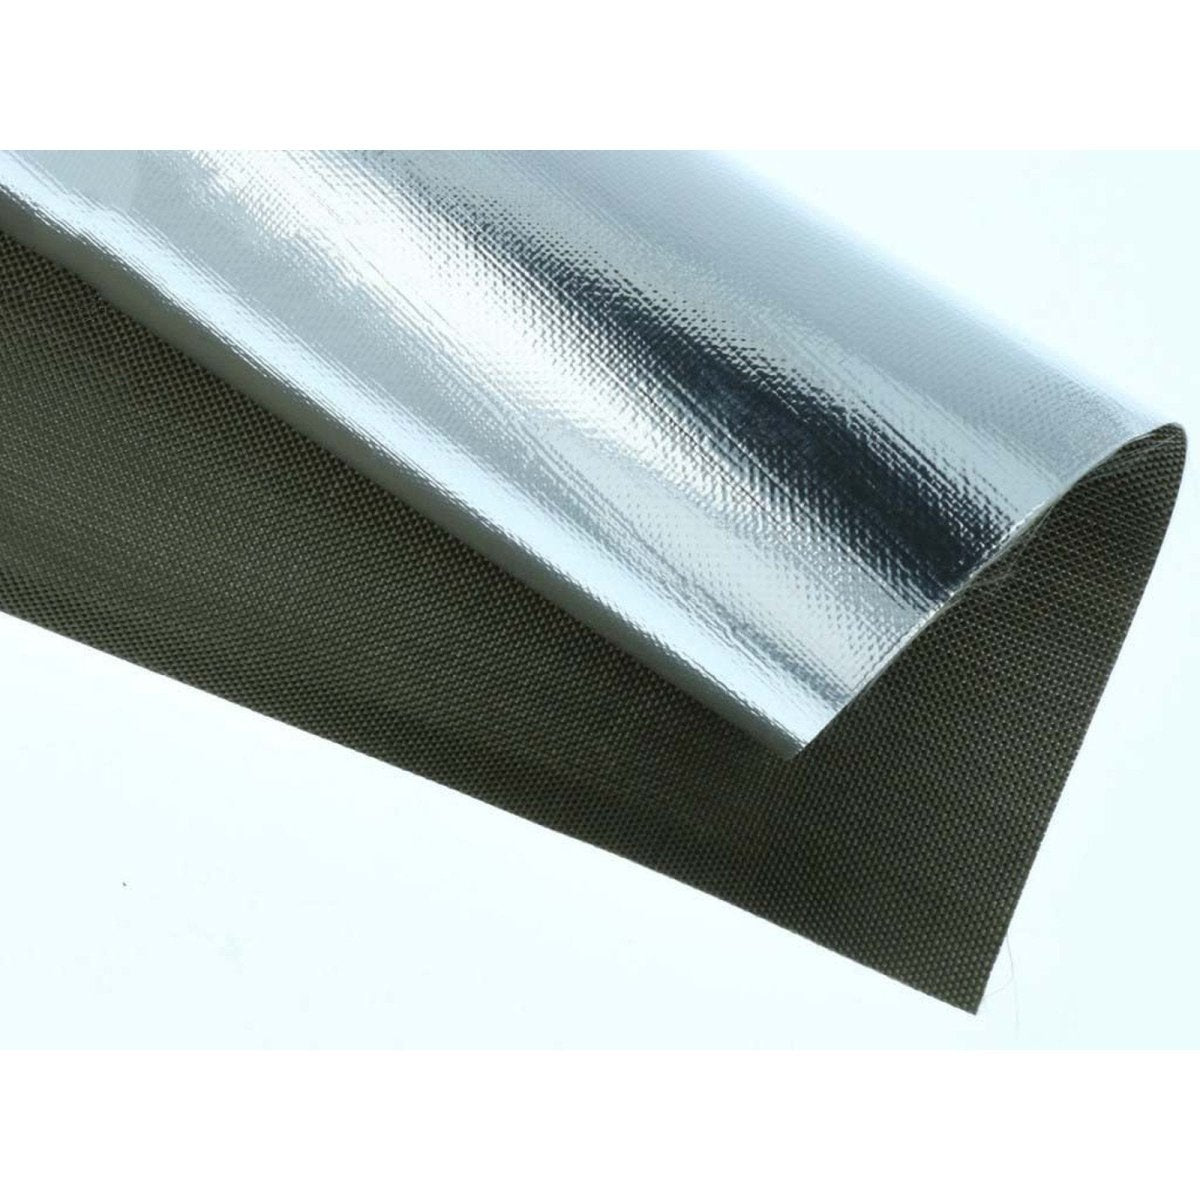 FAMEFORM heat protection fabric mat titanium (self-adhesive) - PARTS33 GmbH